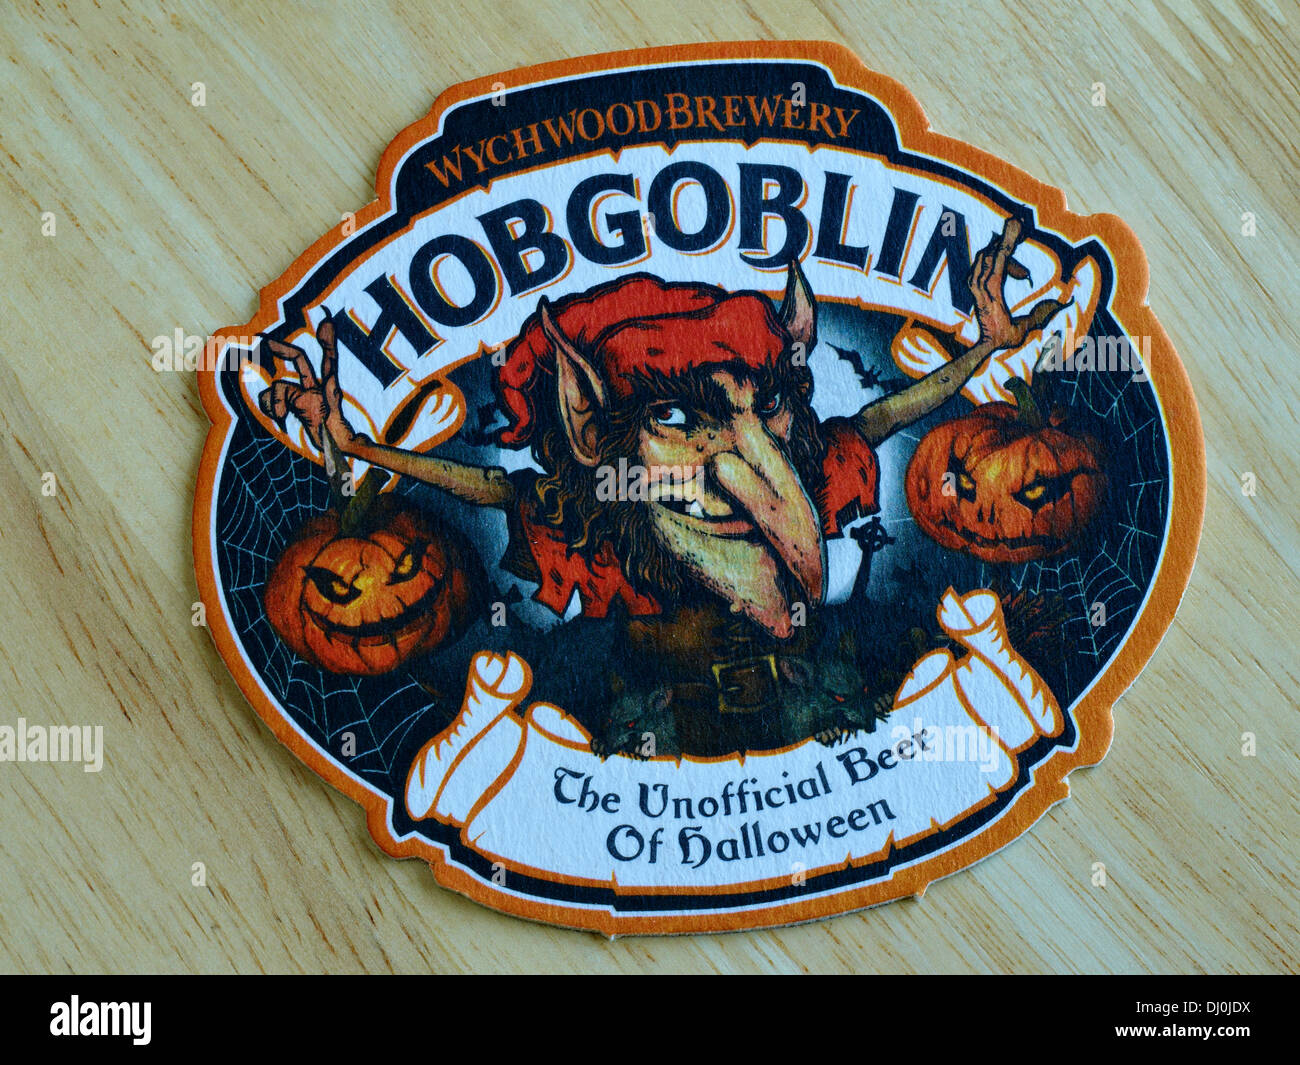 Wychwood brewery Hobgoblin, the unofficial beer of Halloween, beer mat UK Stock Photo